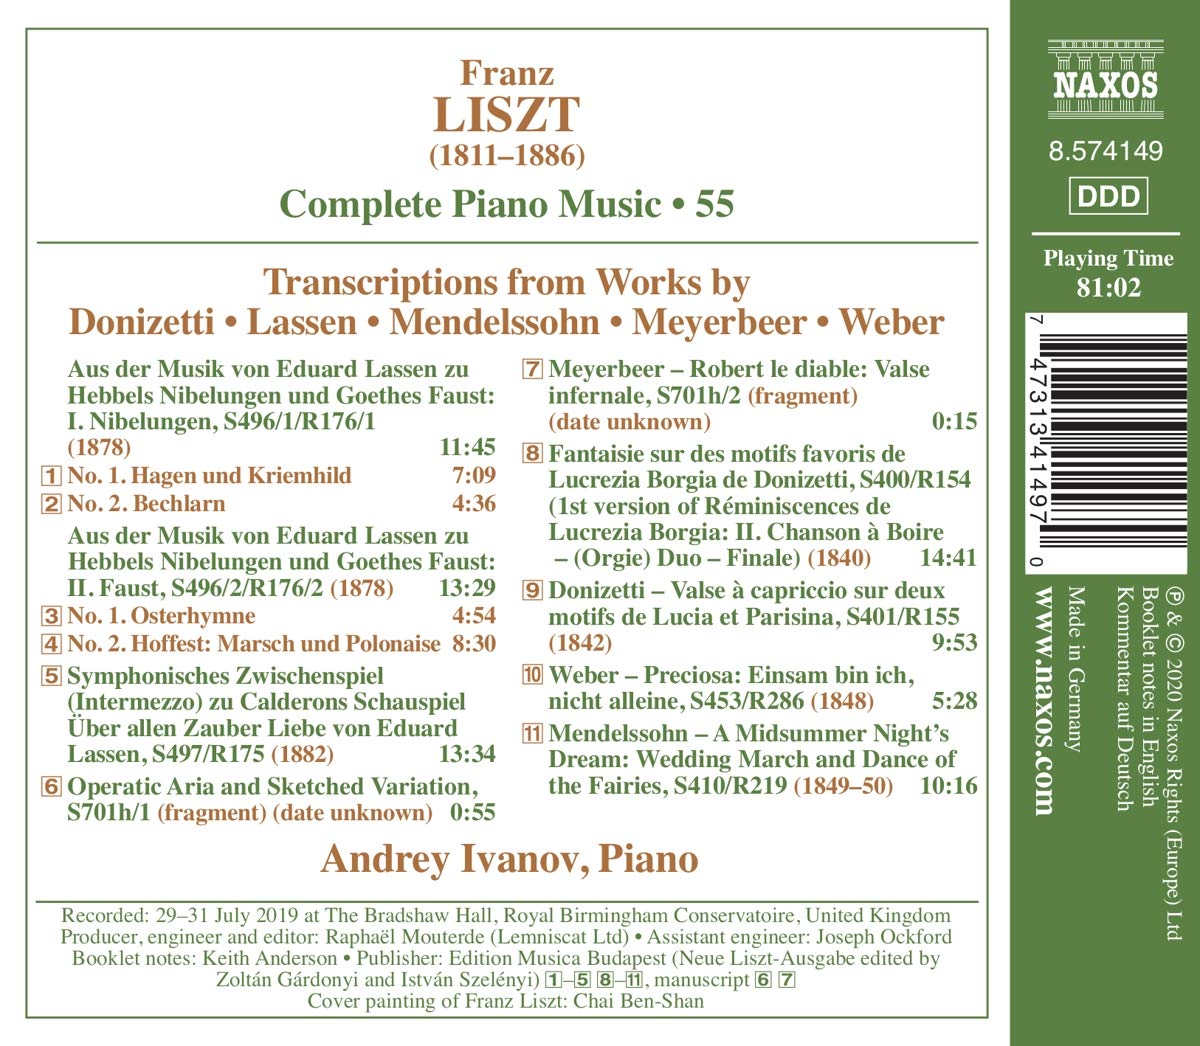 Liszt Ivanov Transcriptions Naxos CPM 55 2020 fr